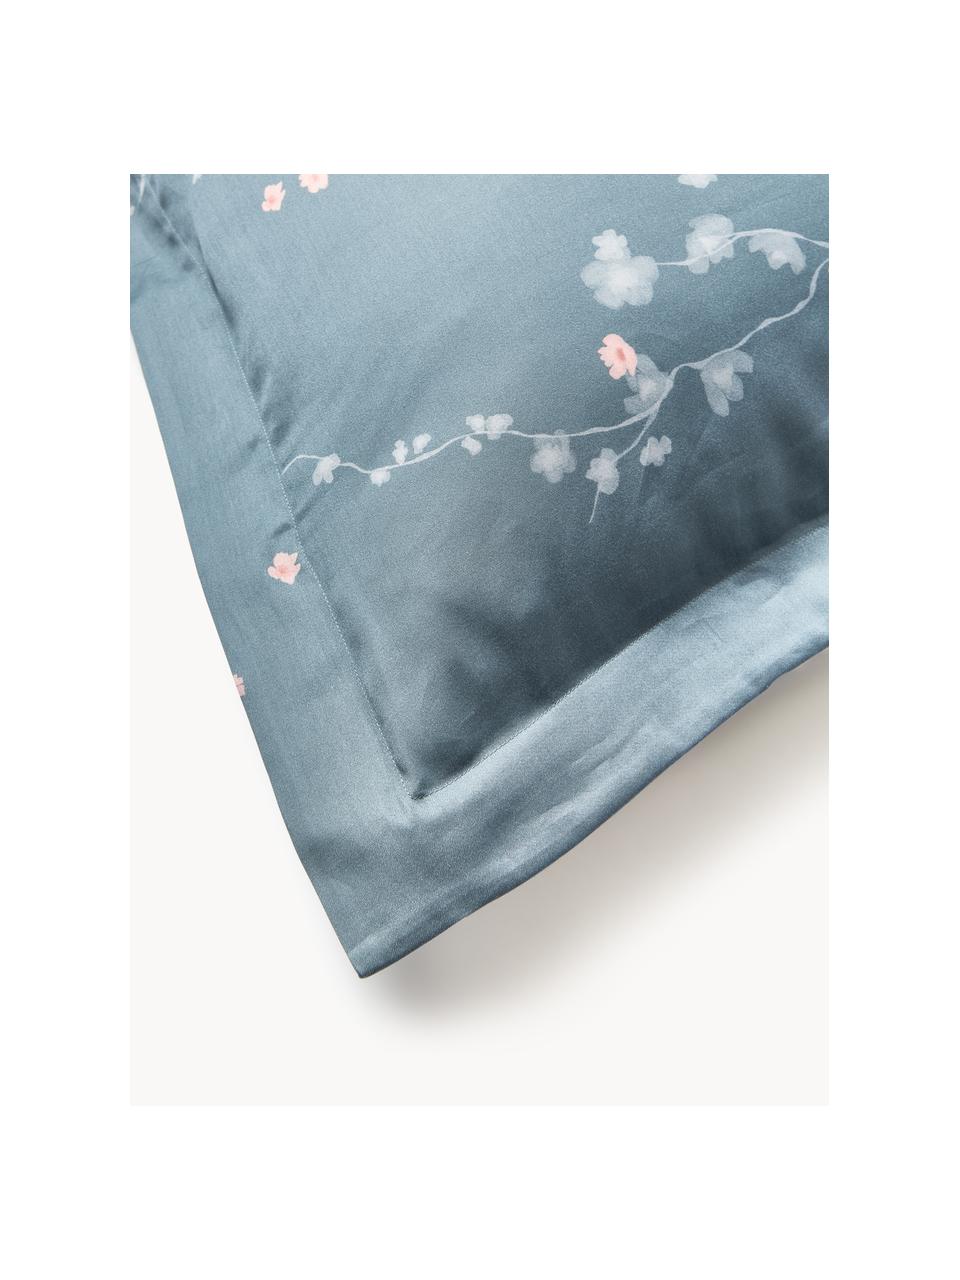 Funda nórdica de satén con estampado floral Sakura, Azul, rosa claro, blanco, Cama 180/200 cm (260 x 240 cm)